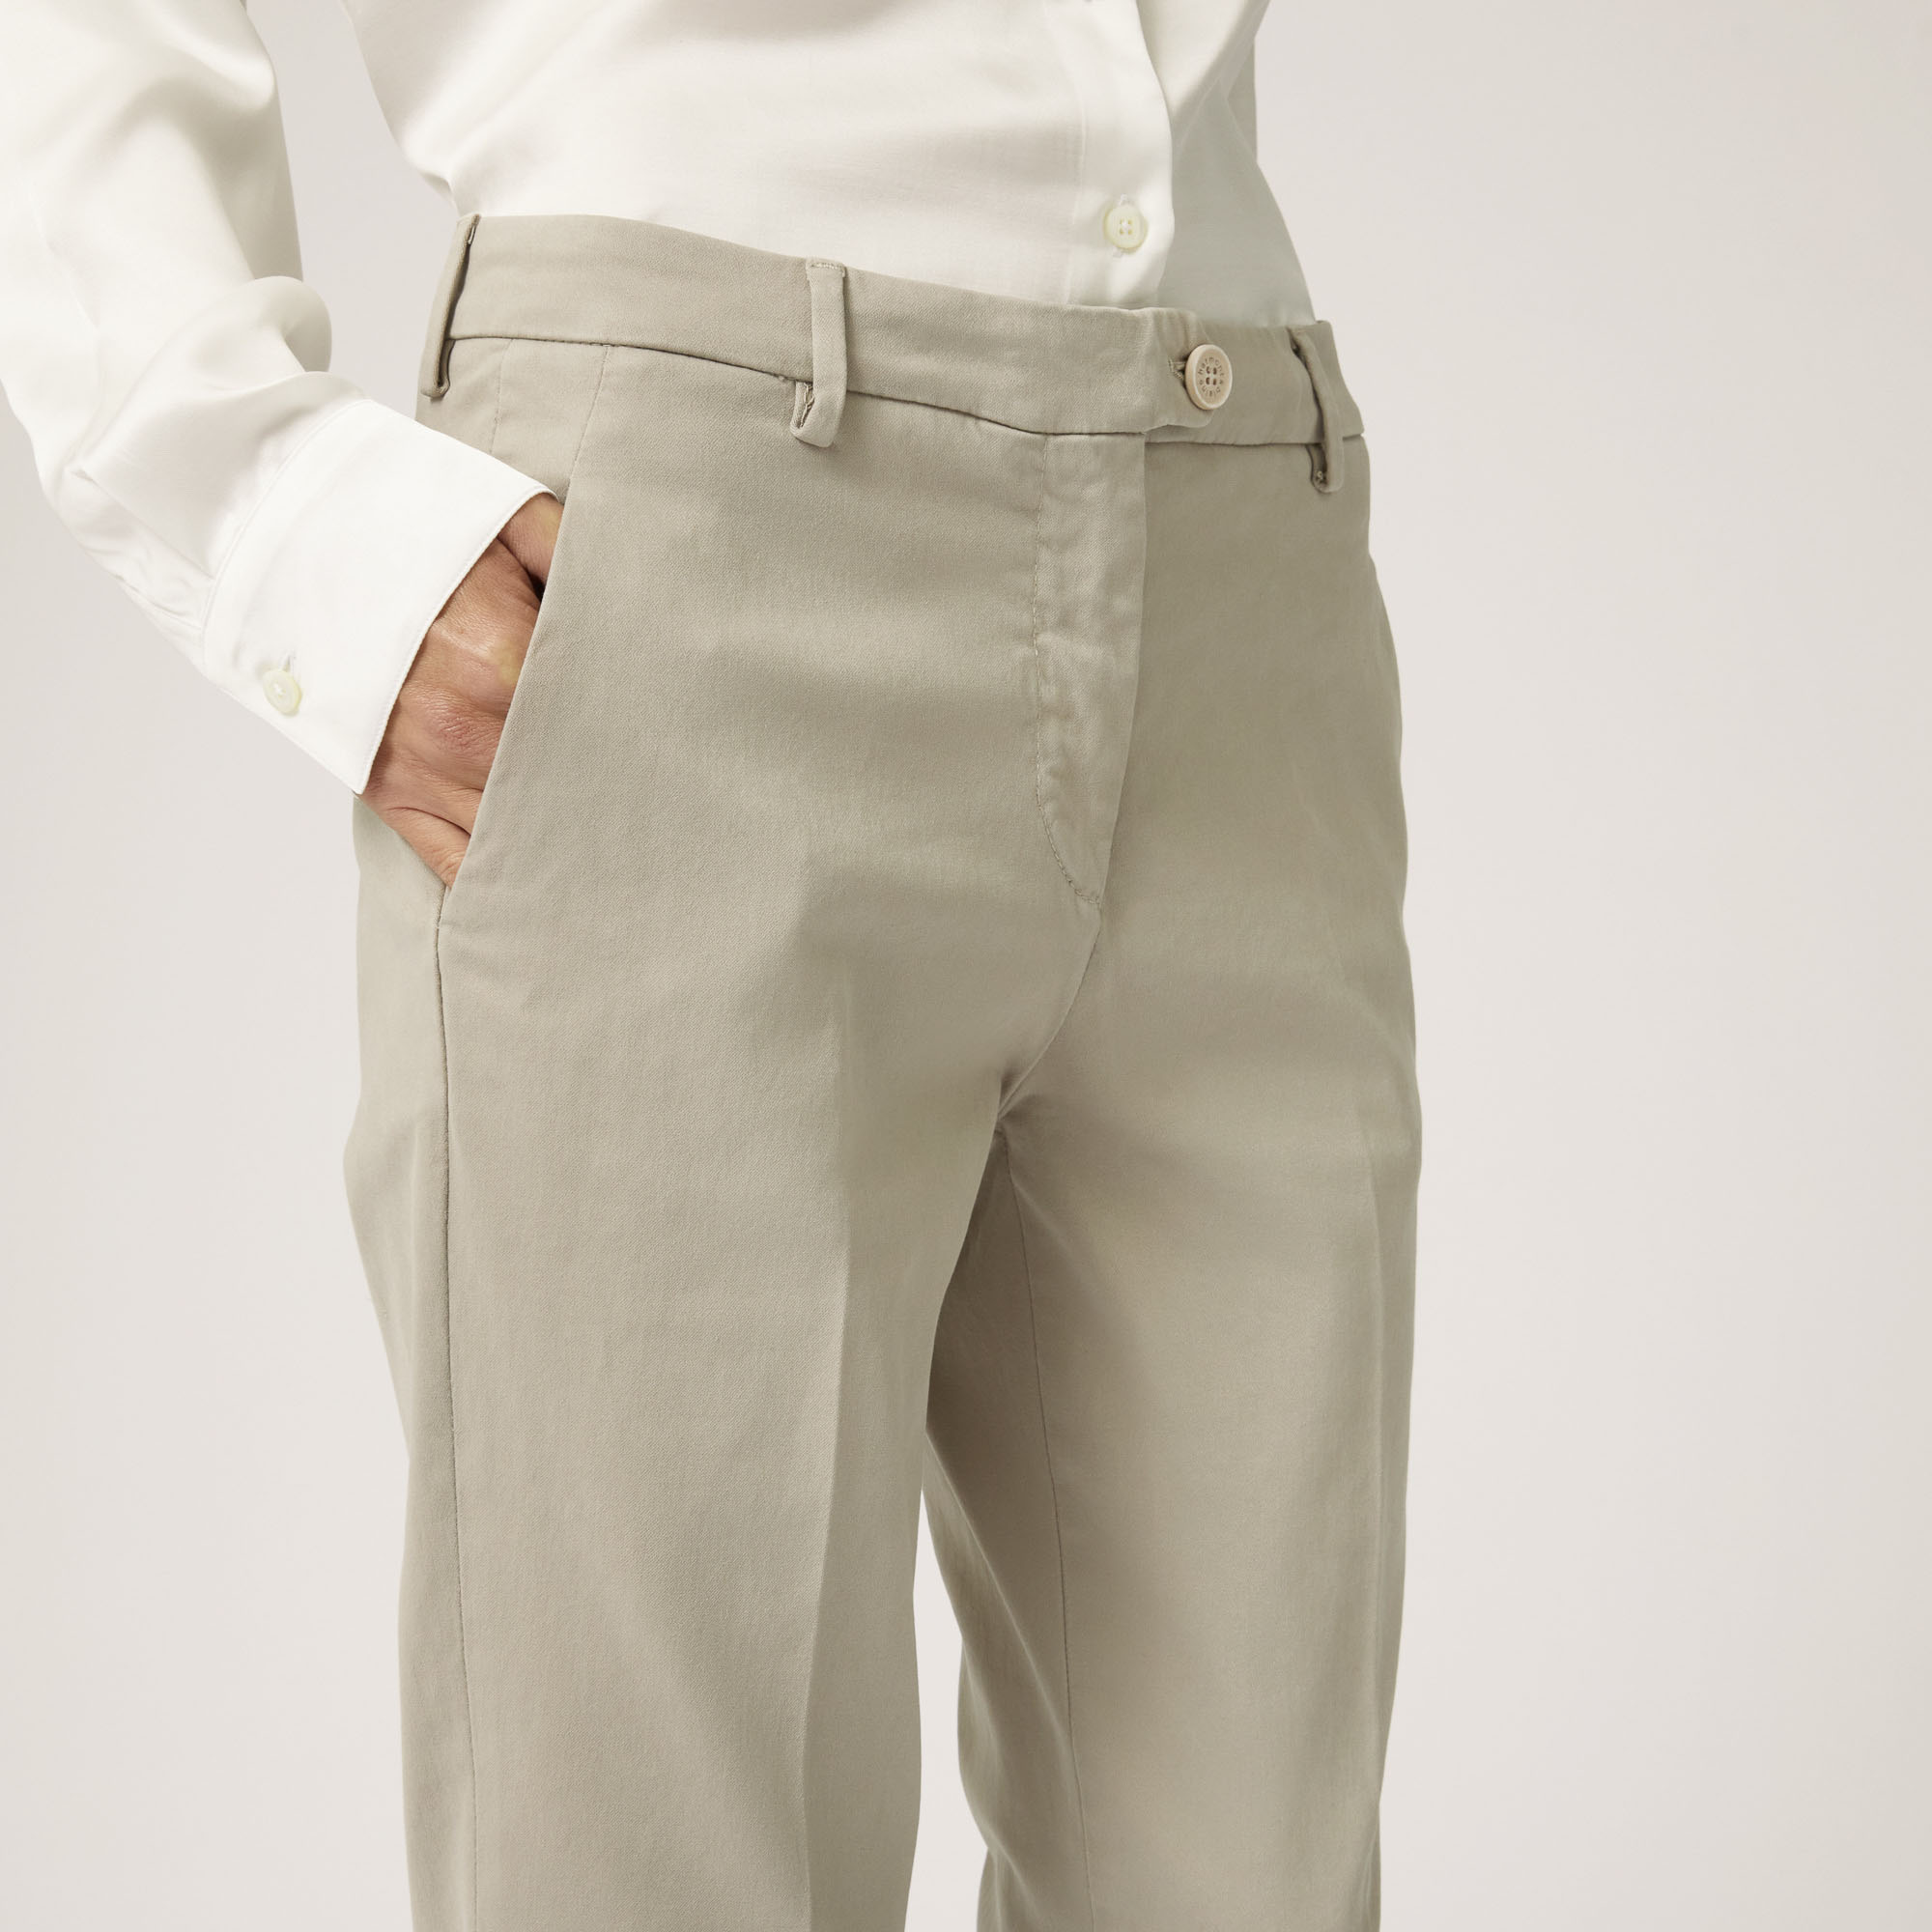 Pantalone Chino In Cotone Stretch, Beige, large